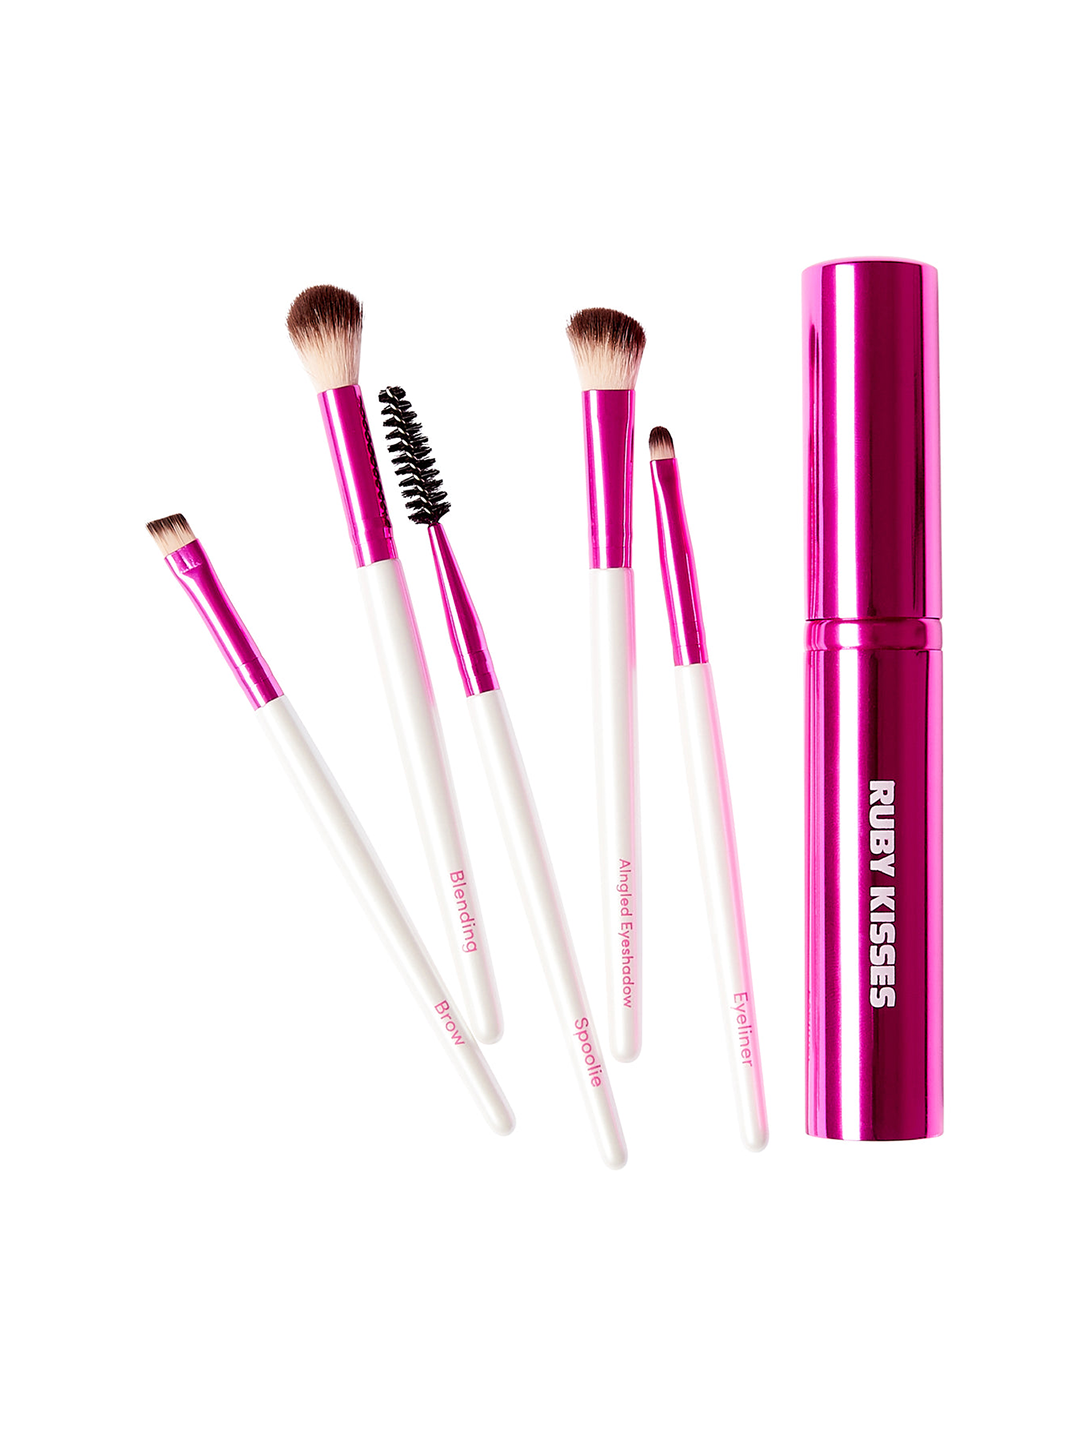 Ruby Kisses Premium Makeup Brushes Set - 5 Pieces